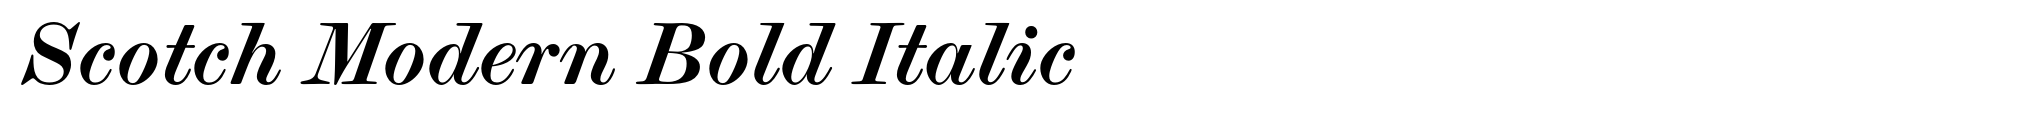 Scotch Modern Bold Italic image